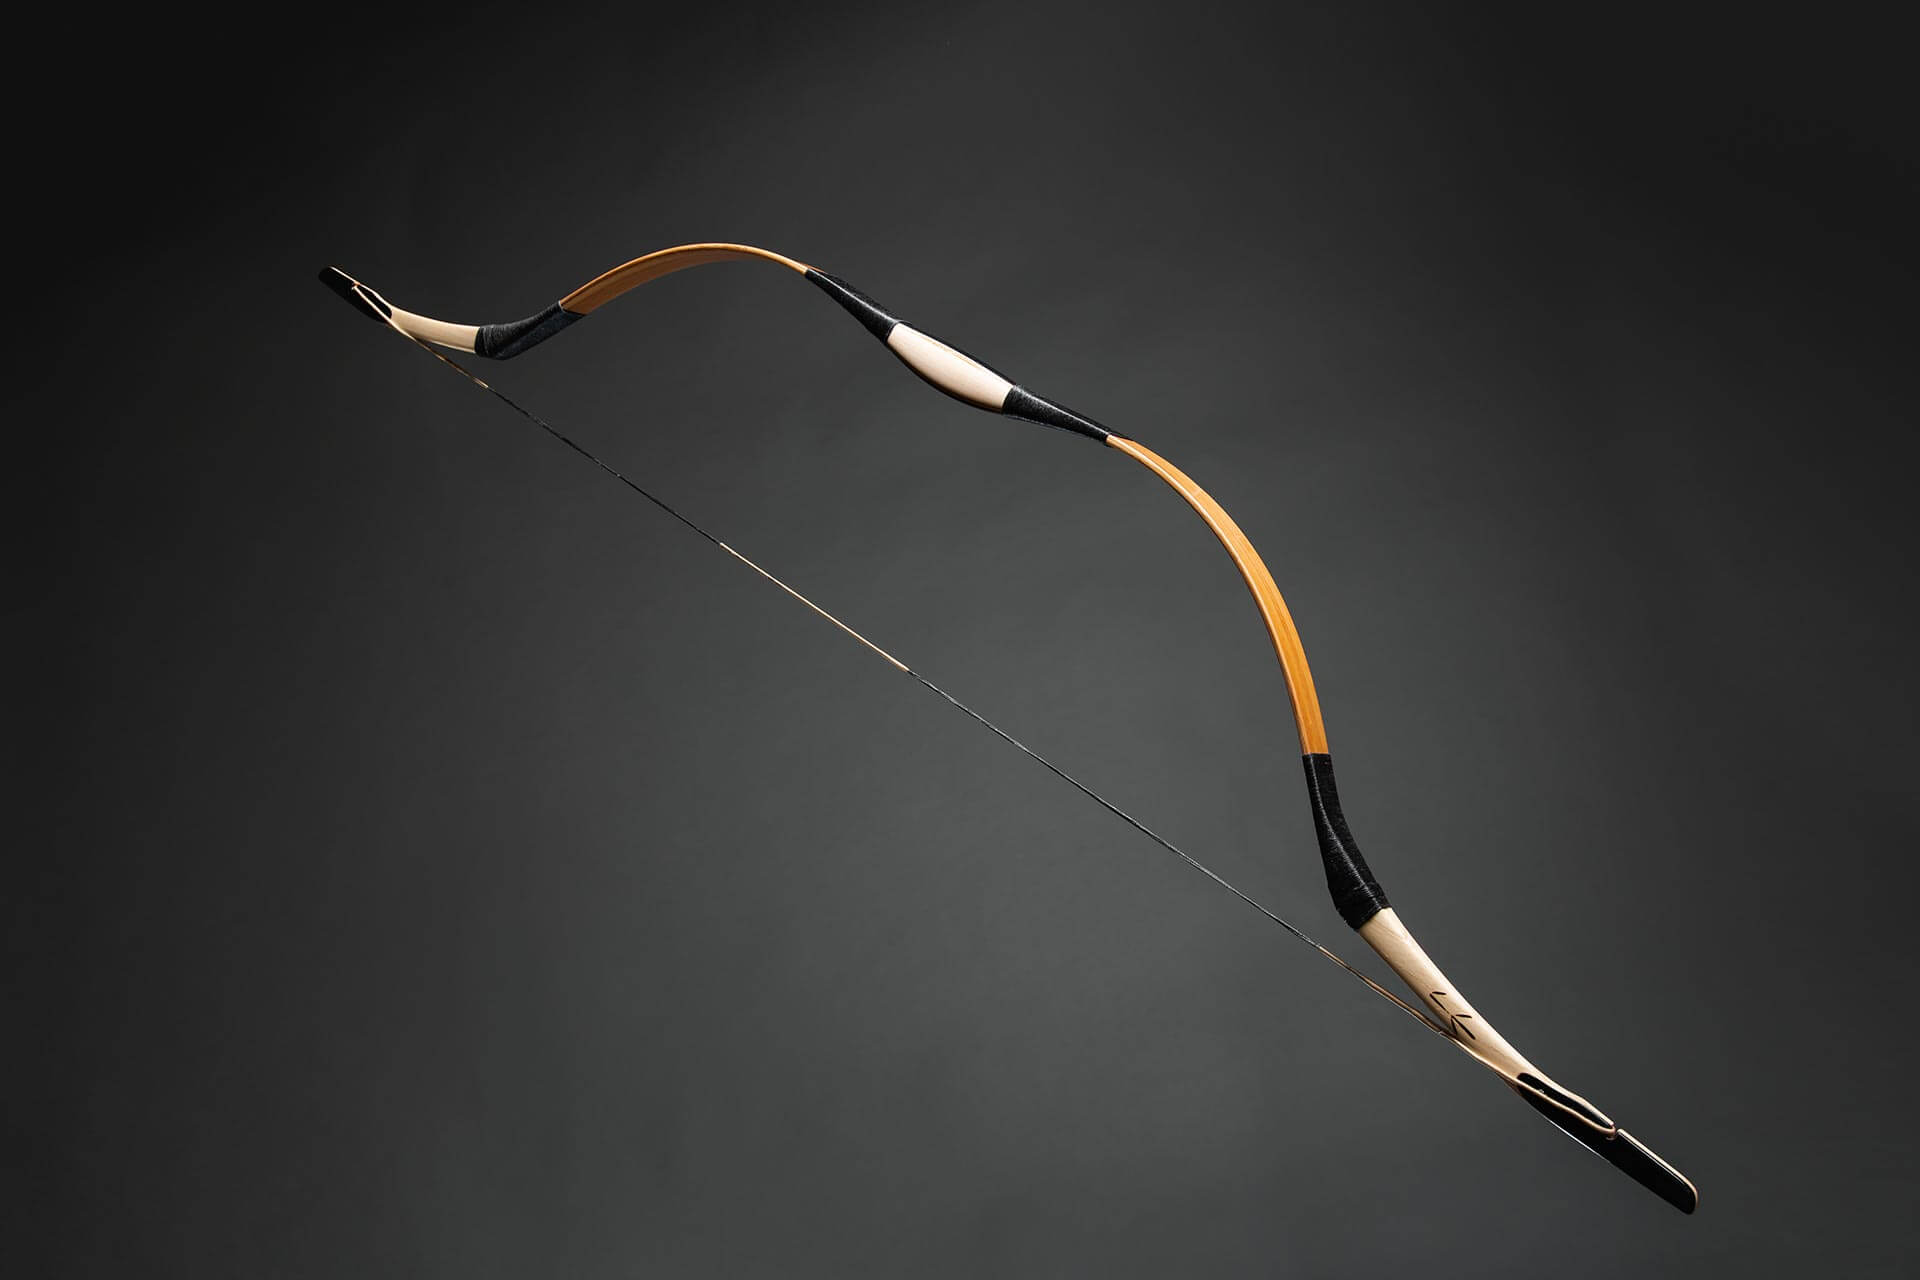 Simple Laminated Bows - Grózer Archery